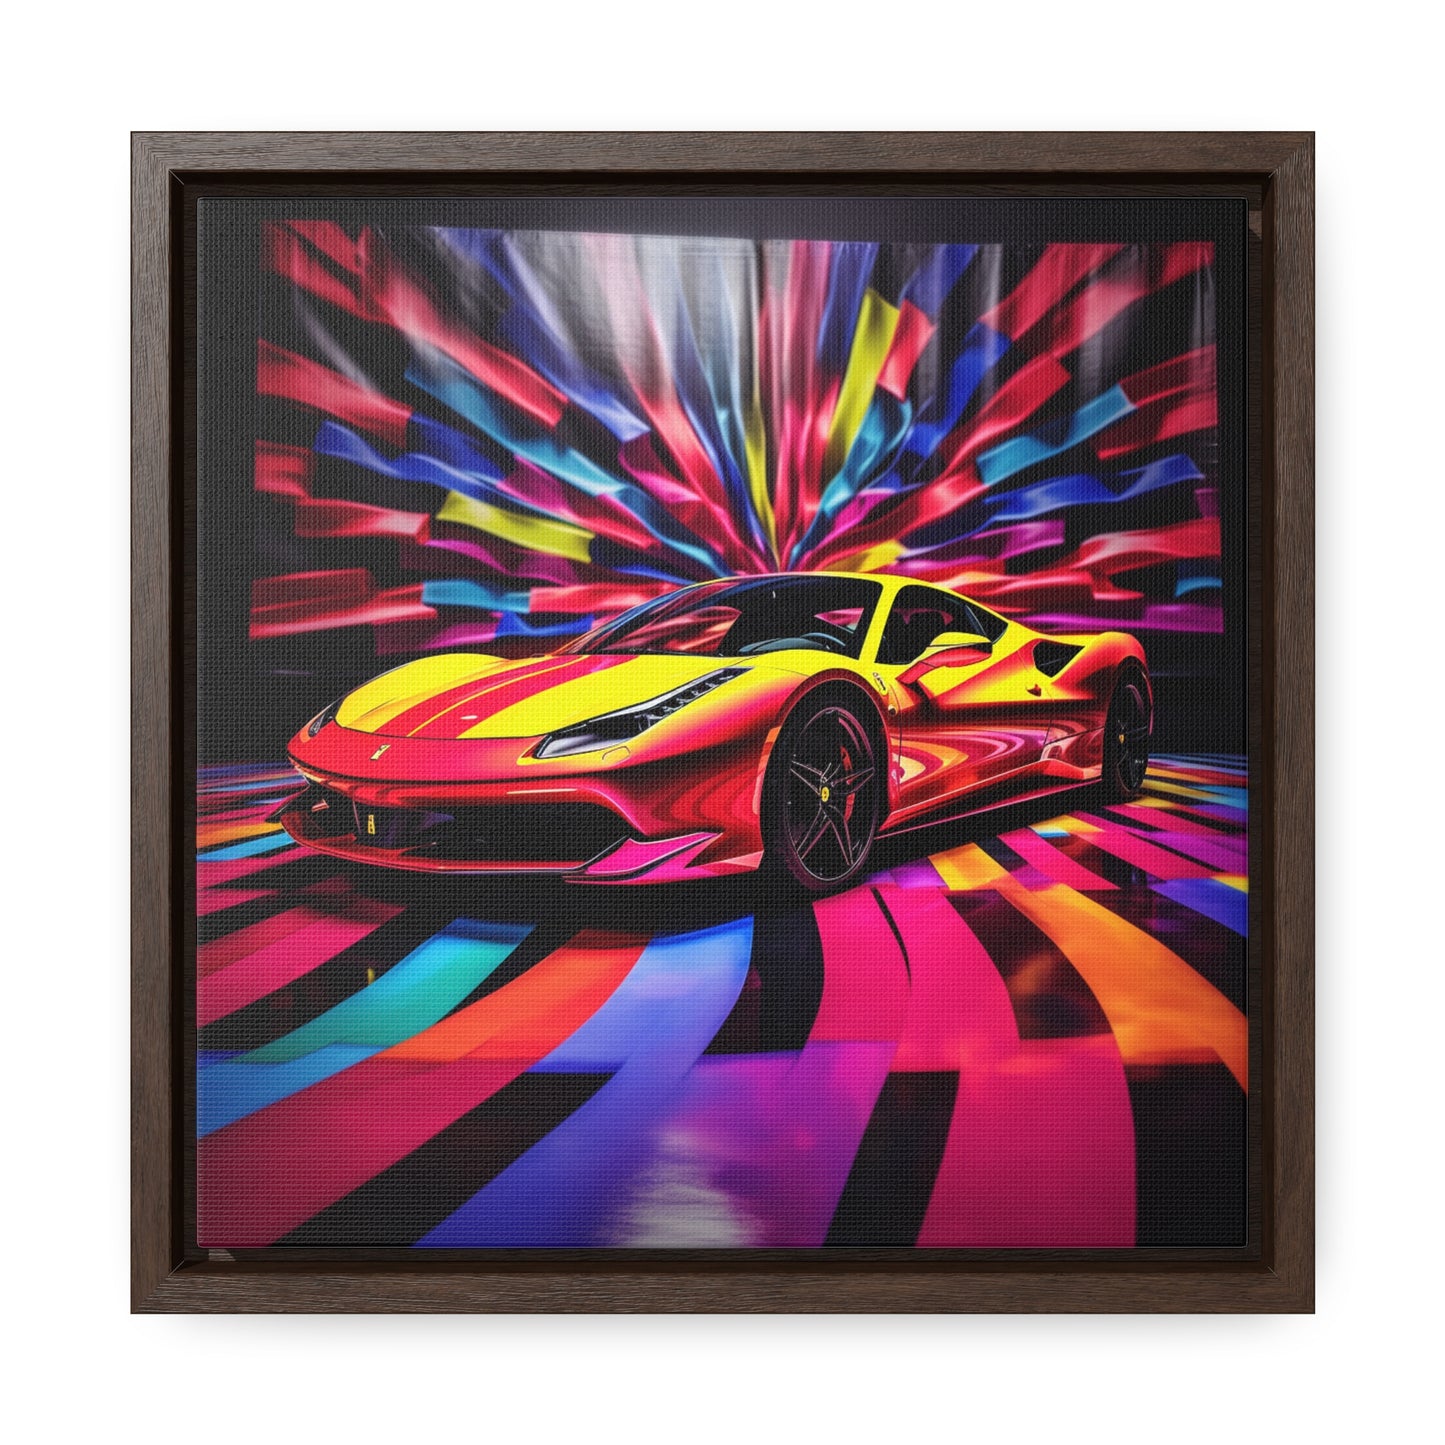 Gallery Canvas Wraps, Square Frame Macro Flag Ferrari 3